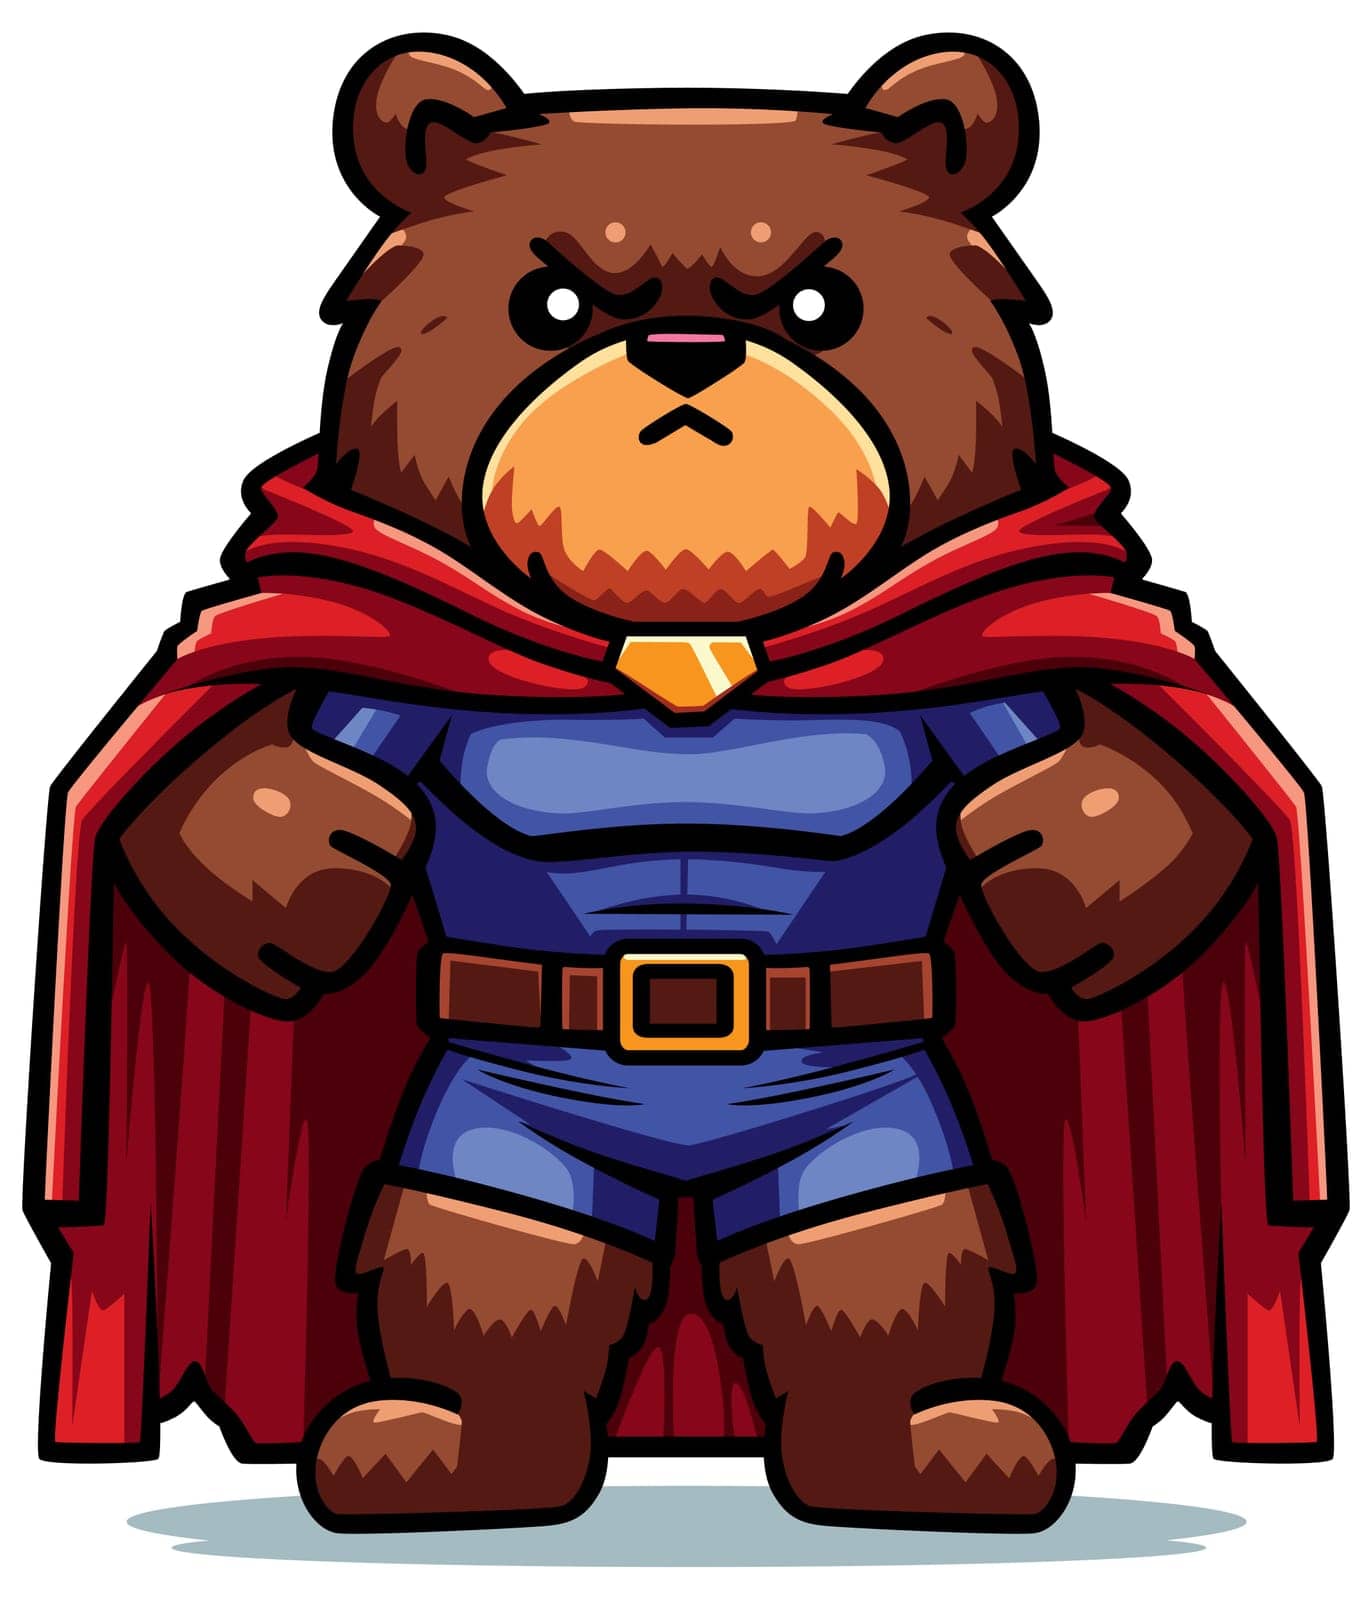 Bear Superhero Kawaii by Malchev